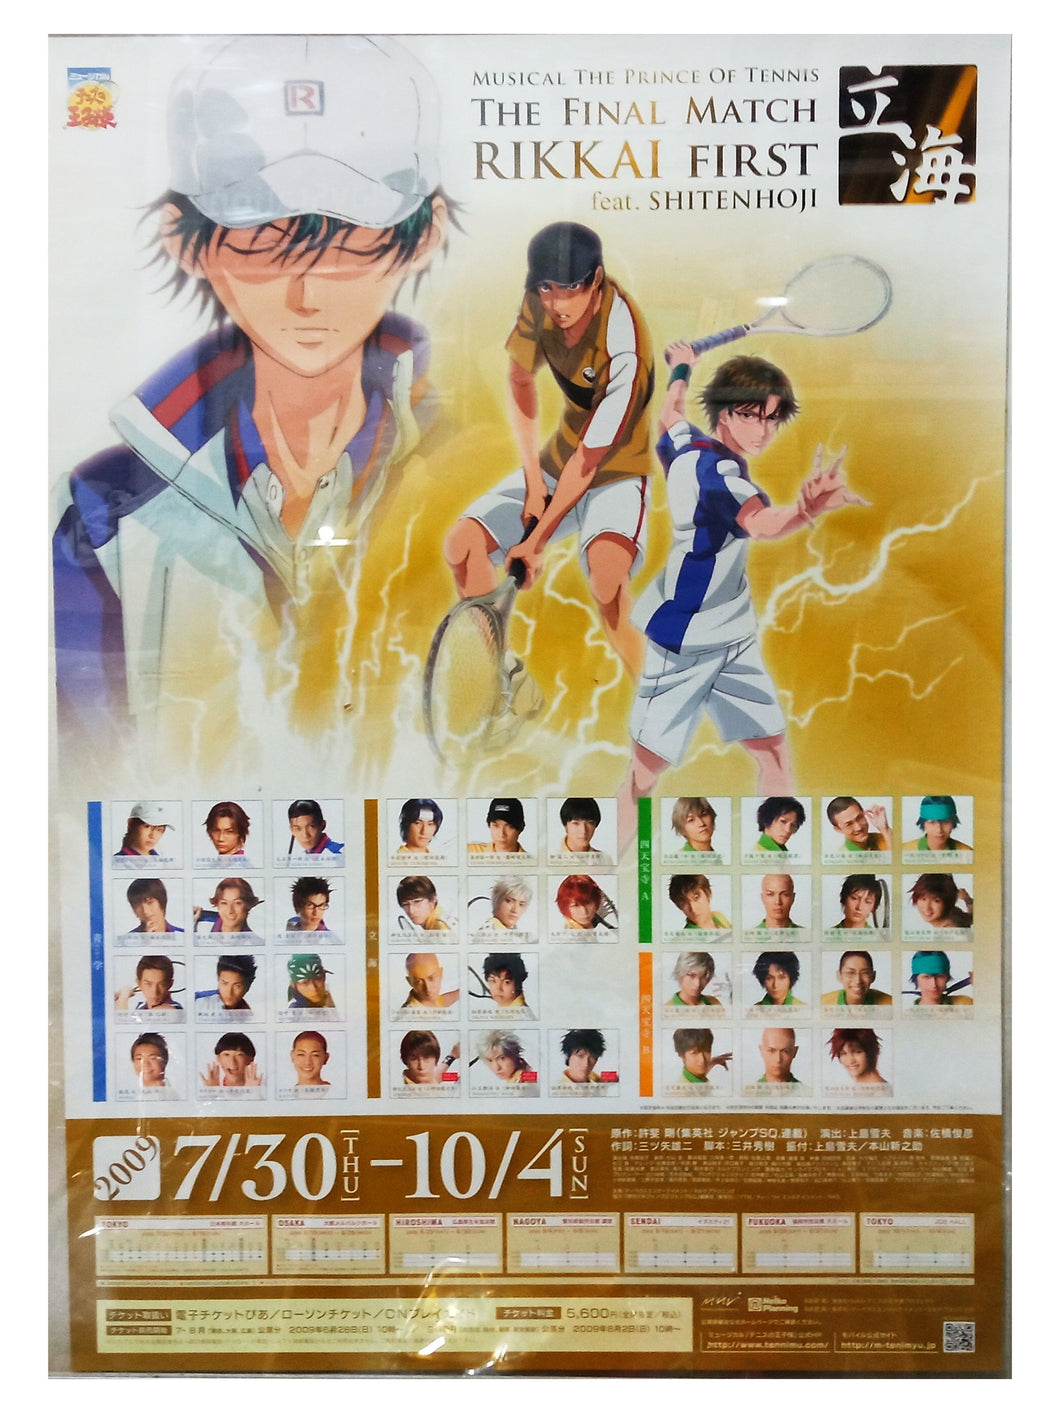 Musical The Prince of Tennis: The Final Match - Rikkai First feat. Shitenhoji - B2 Poster